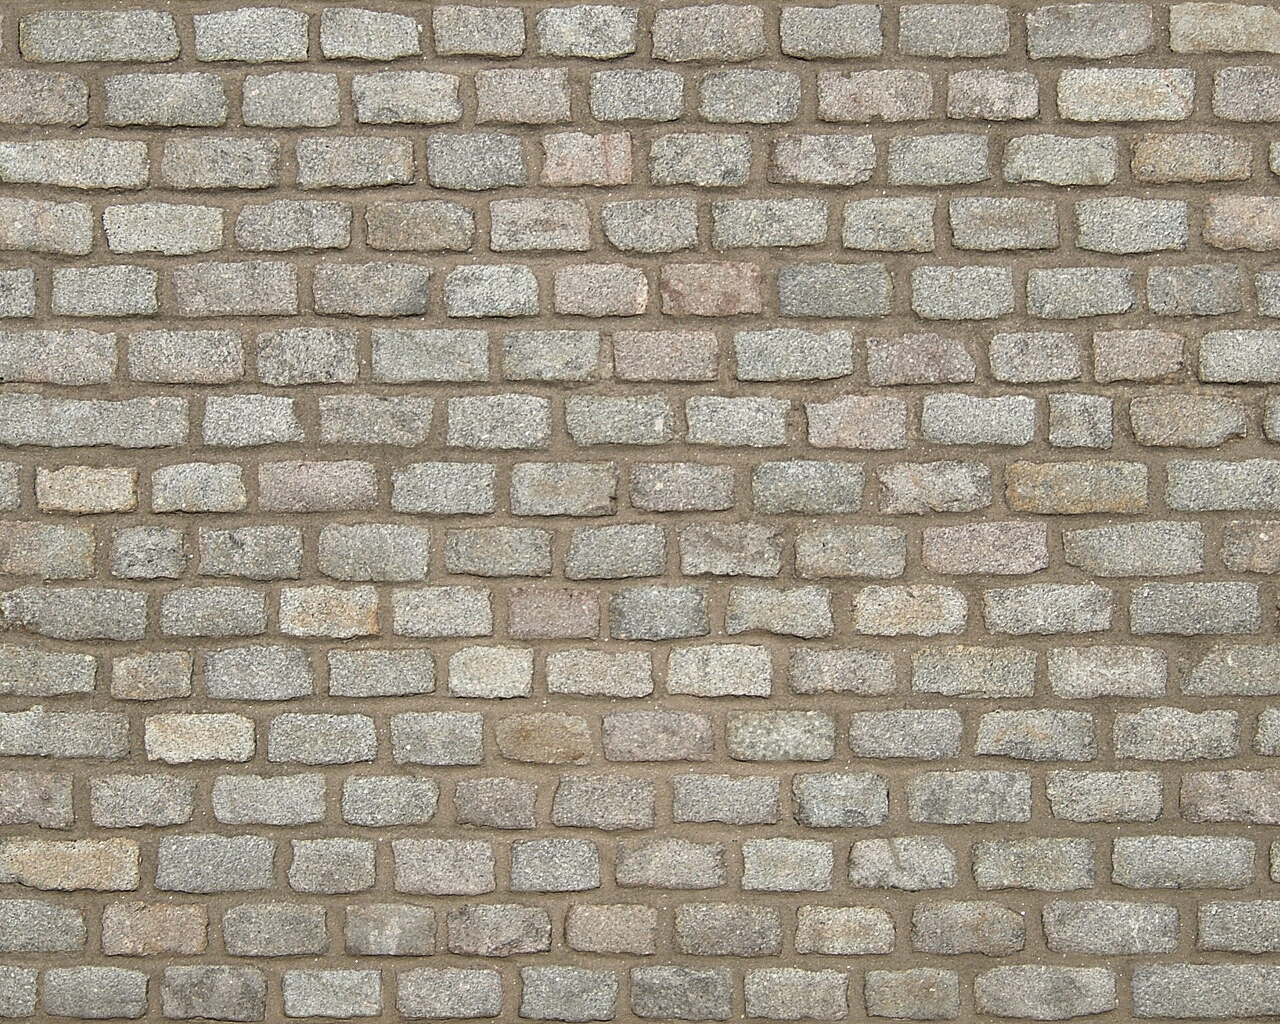 Brick Wall Texture Photoshop